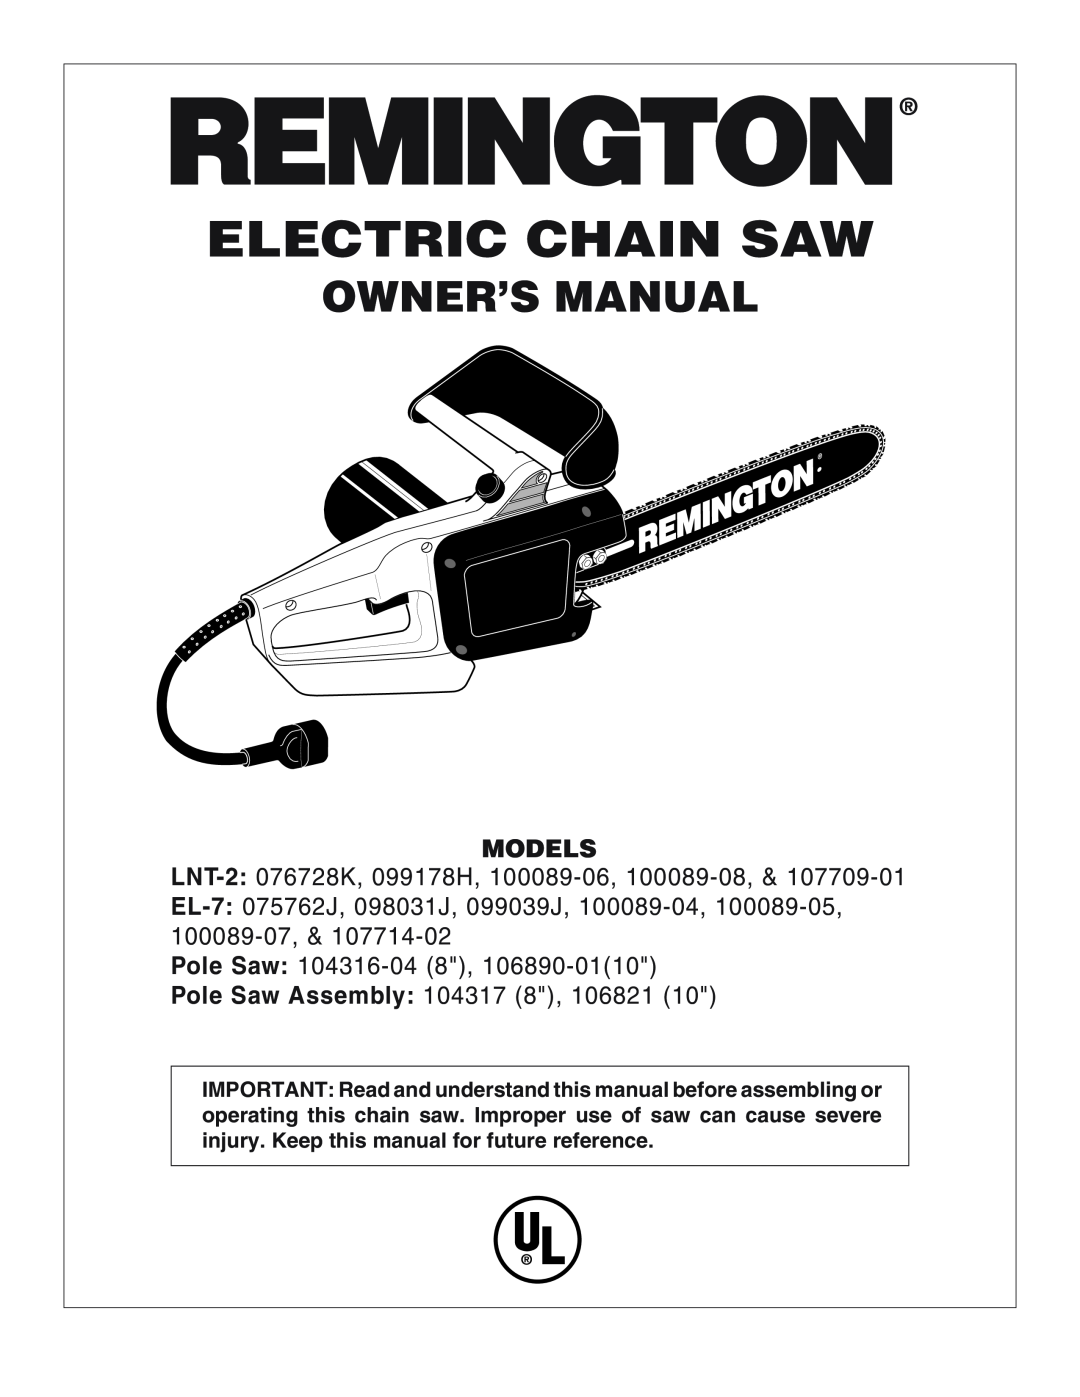 Remington owner manual Electric Chain Saw, Owner’S Manual, Models, LNT-2 076728K, 099178H, 100089-06, 100089-08 